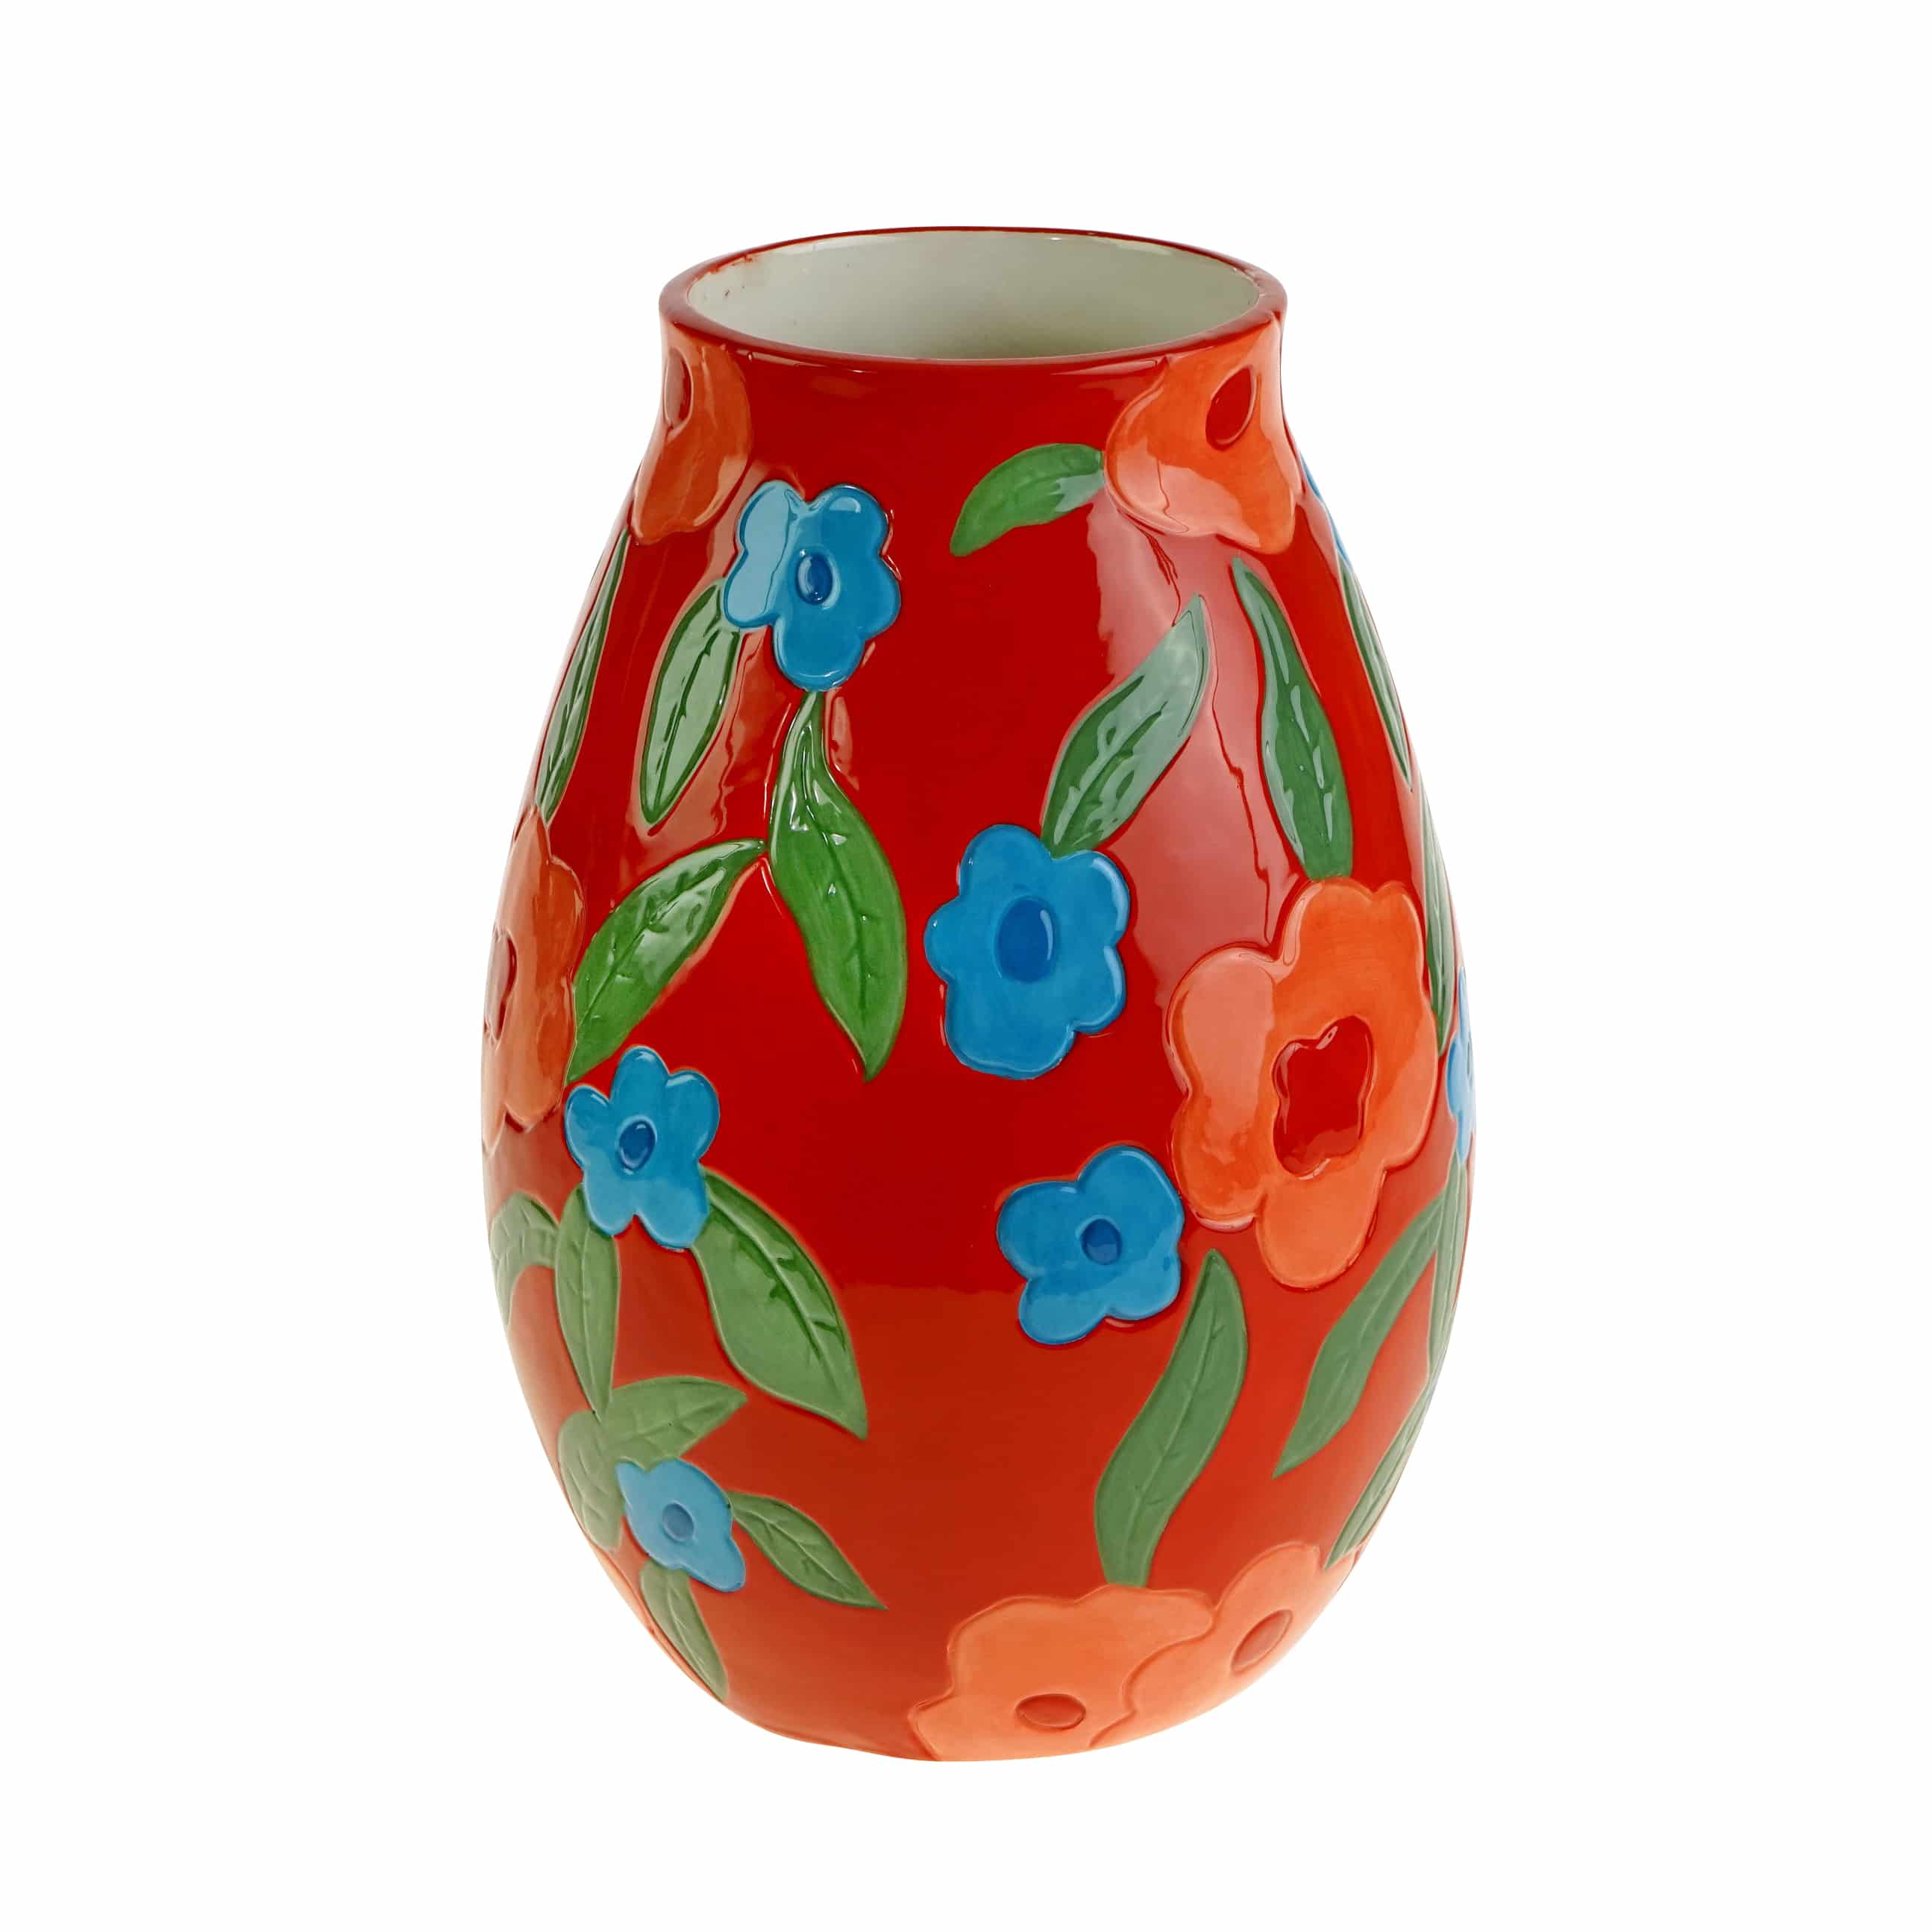 Vase Flores m. Blumenmotiv, rot-blau-grün, handbemalt